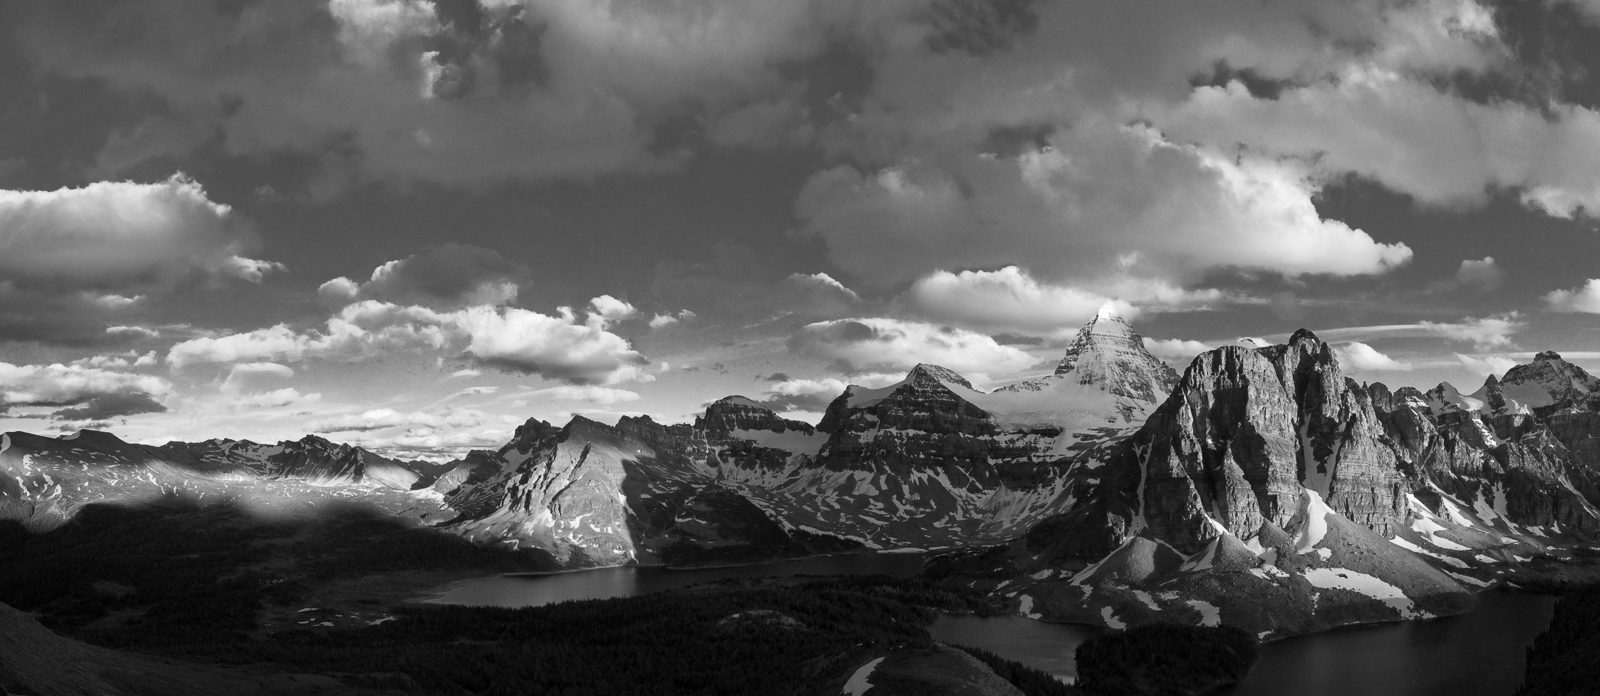 Sunburst peak and Assiniboine group at sunset. High-contrast black and white.